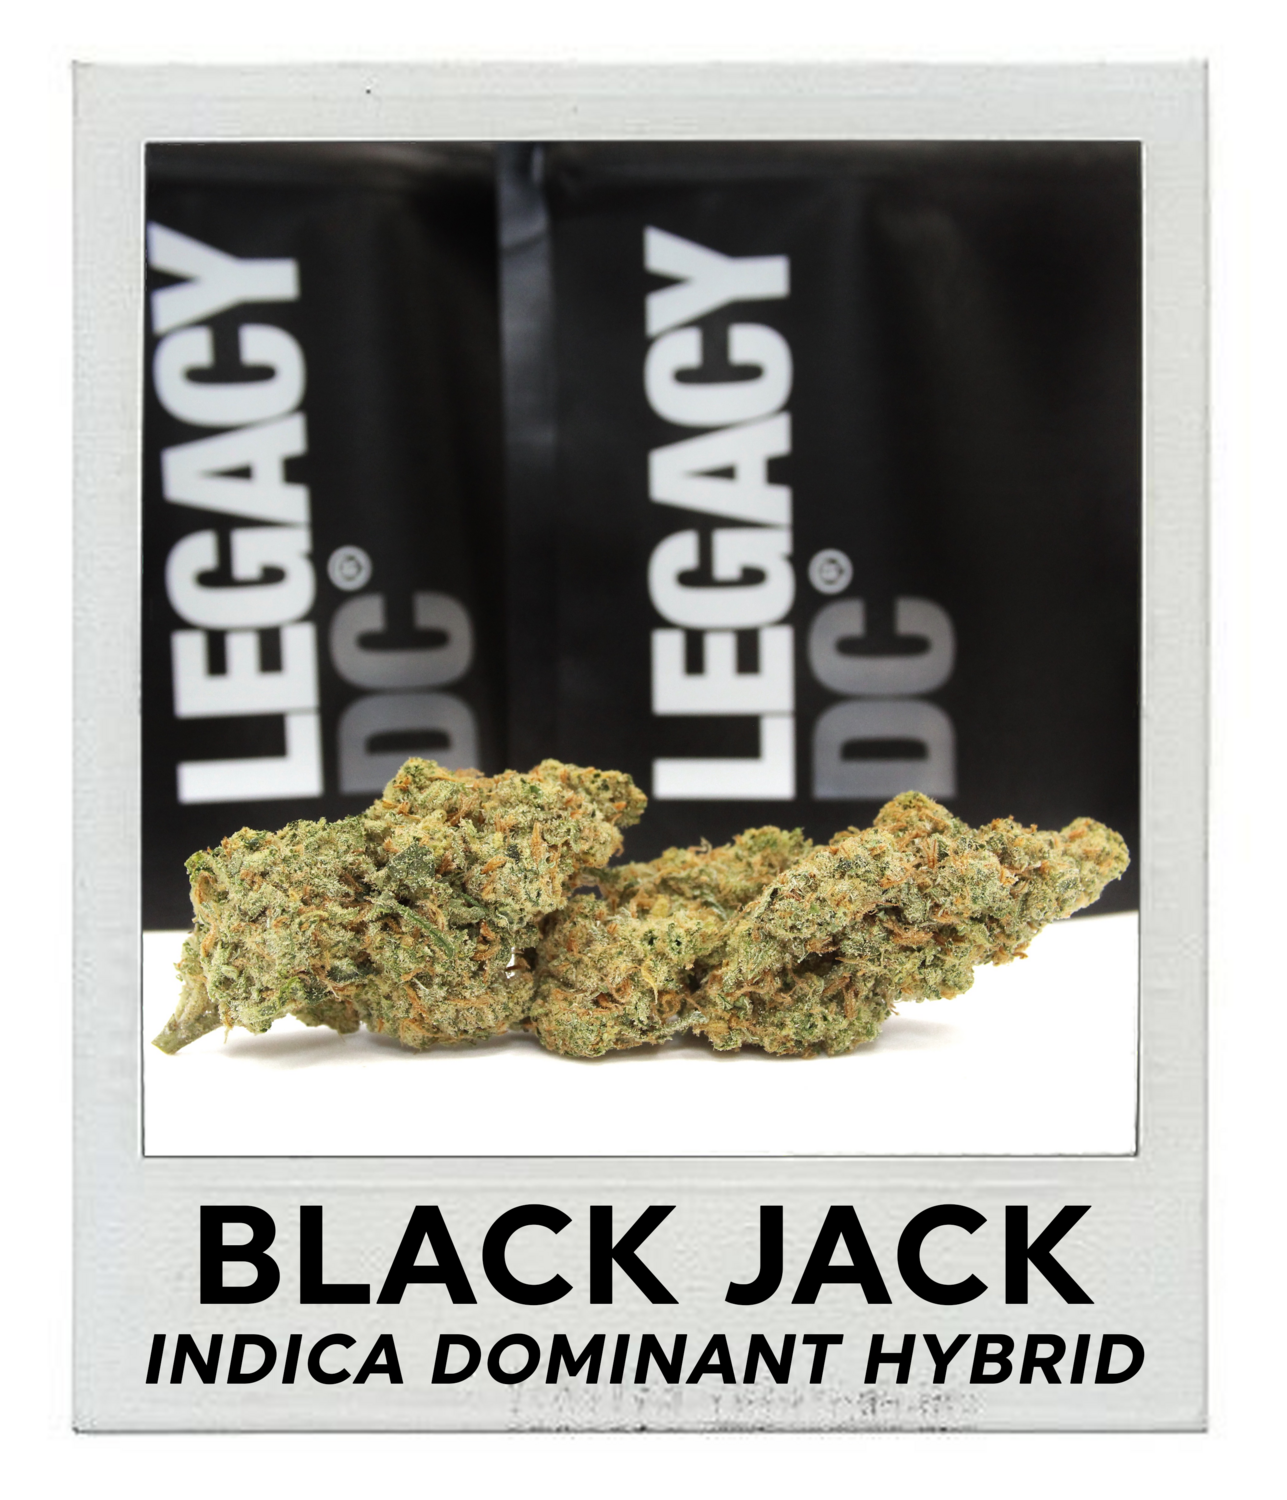 Black Jack (Indica Hybrid)